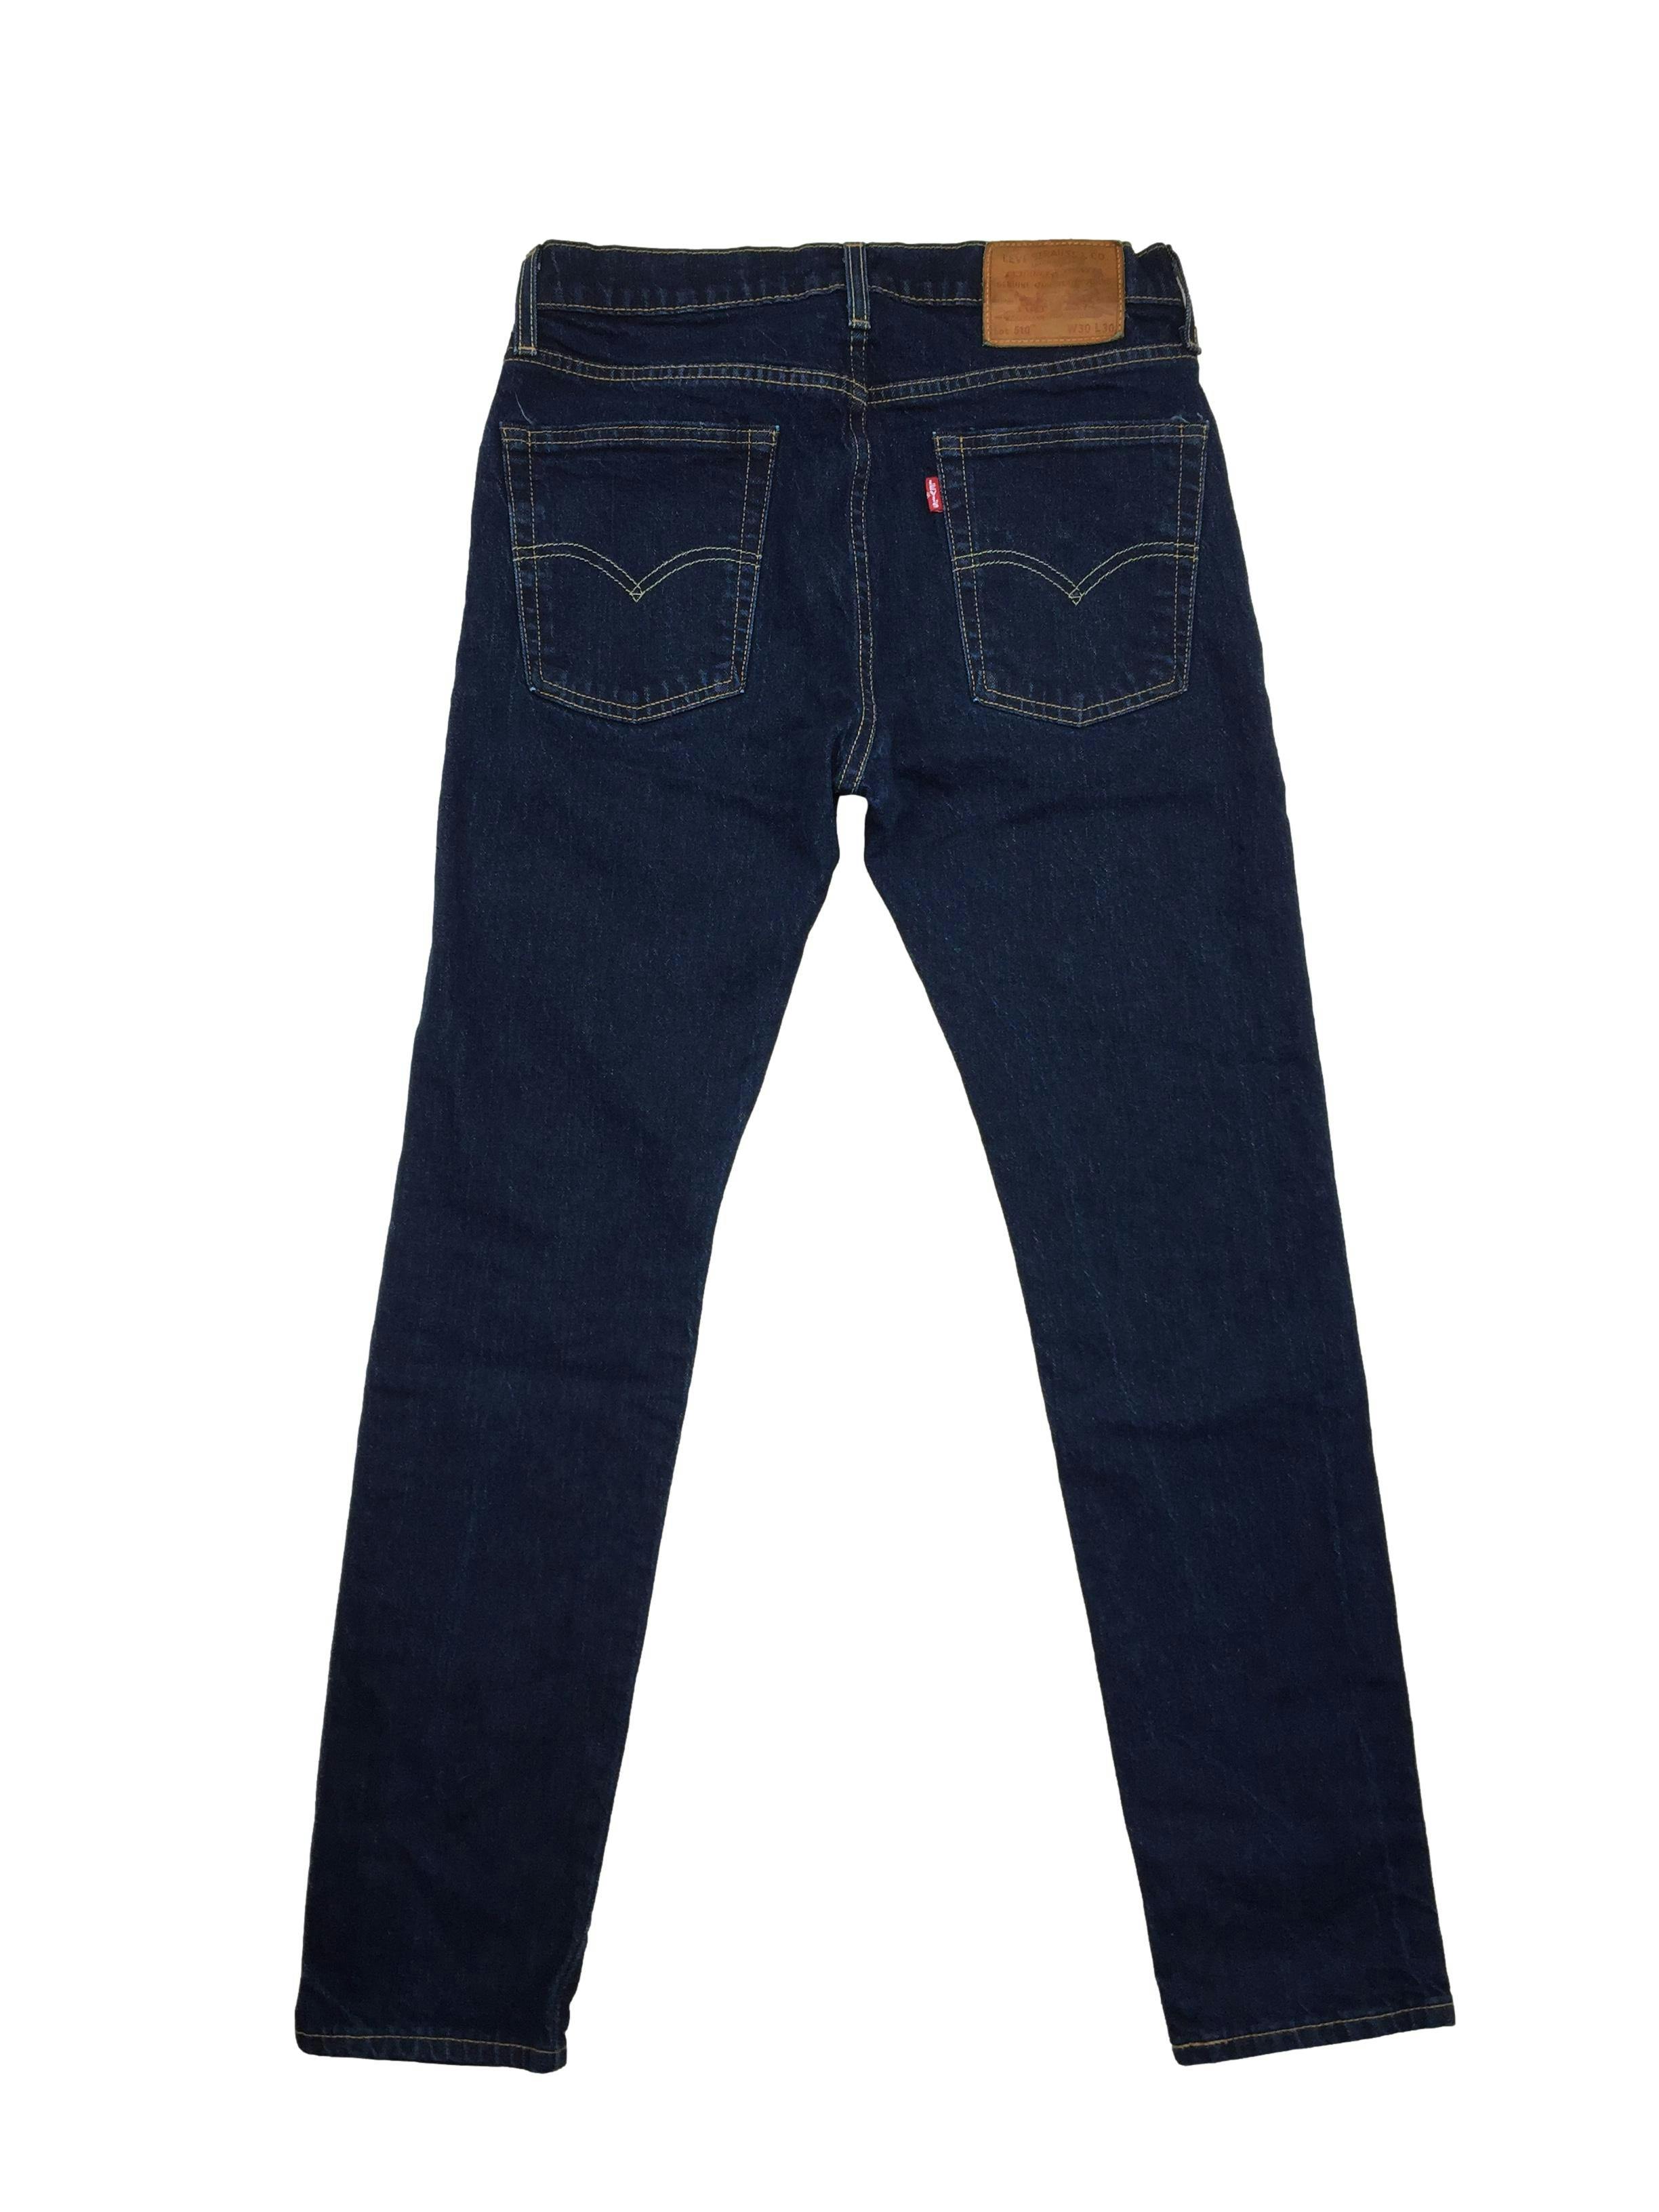 Jean Levi´s azul oscuro, corte slim, 99% algodón 1% elastano. Cintura 75cm Tiro 26cm Largo 97cm